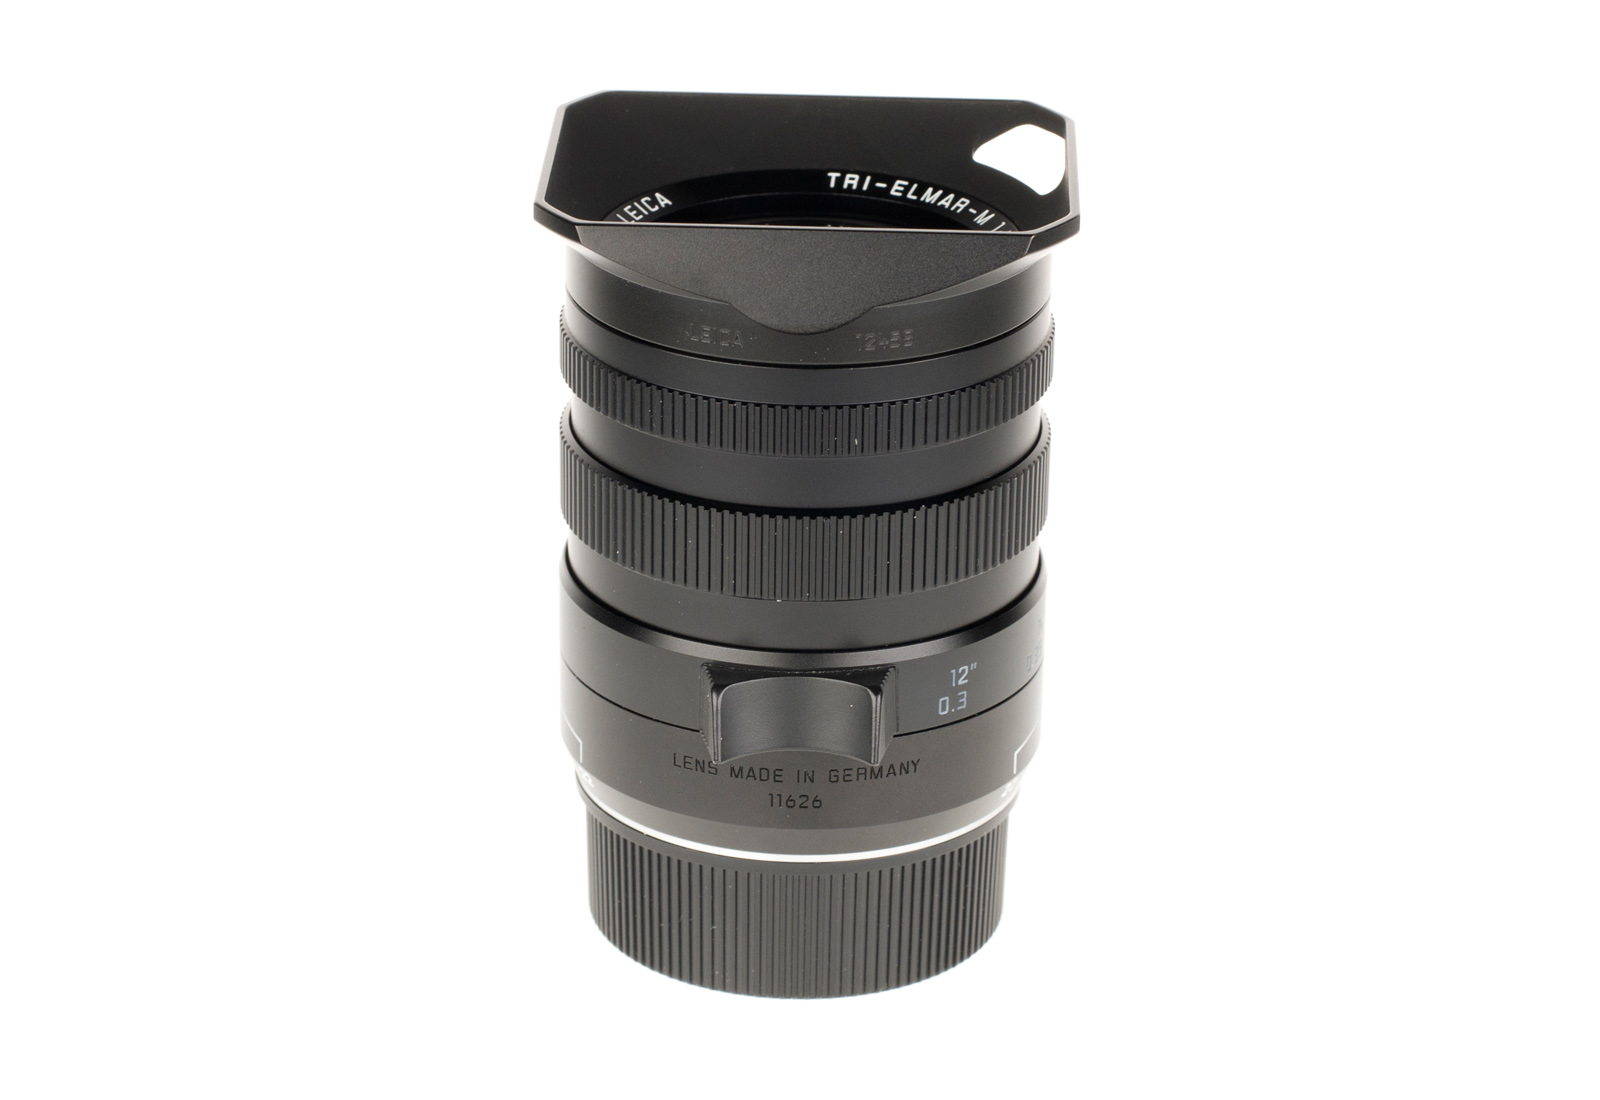 Leica Tri-Elmar-M 1:4/16-18-21mm ASPH. + Universal Wide Angel Finder M 11642